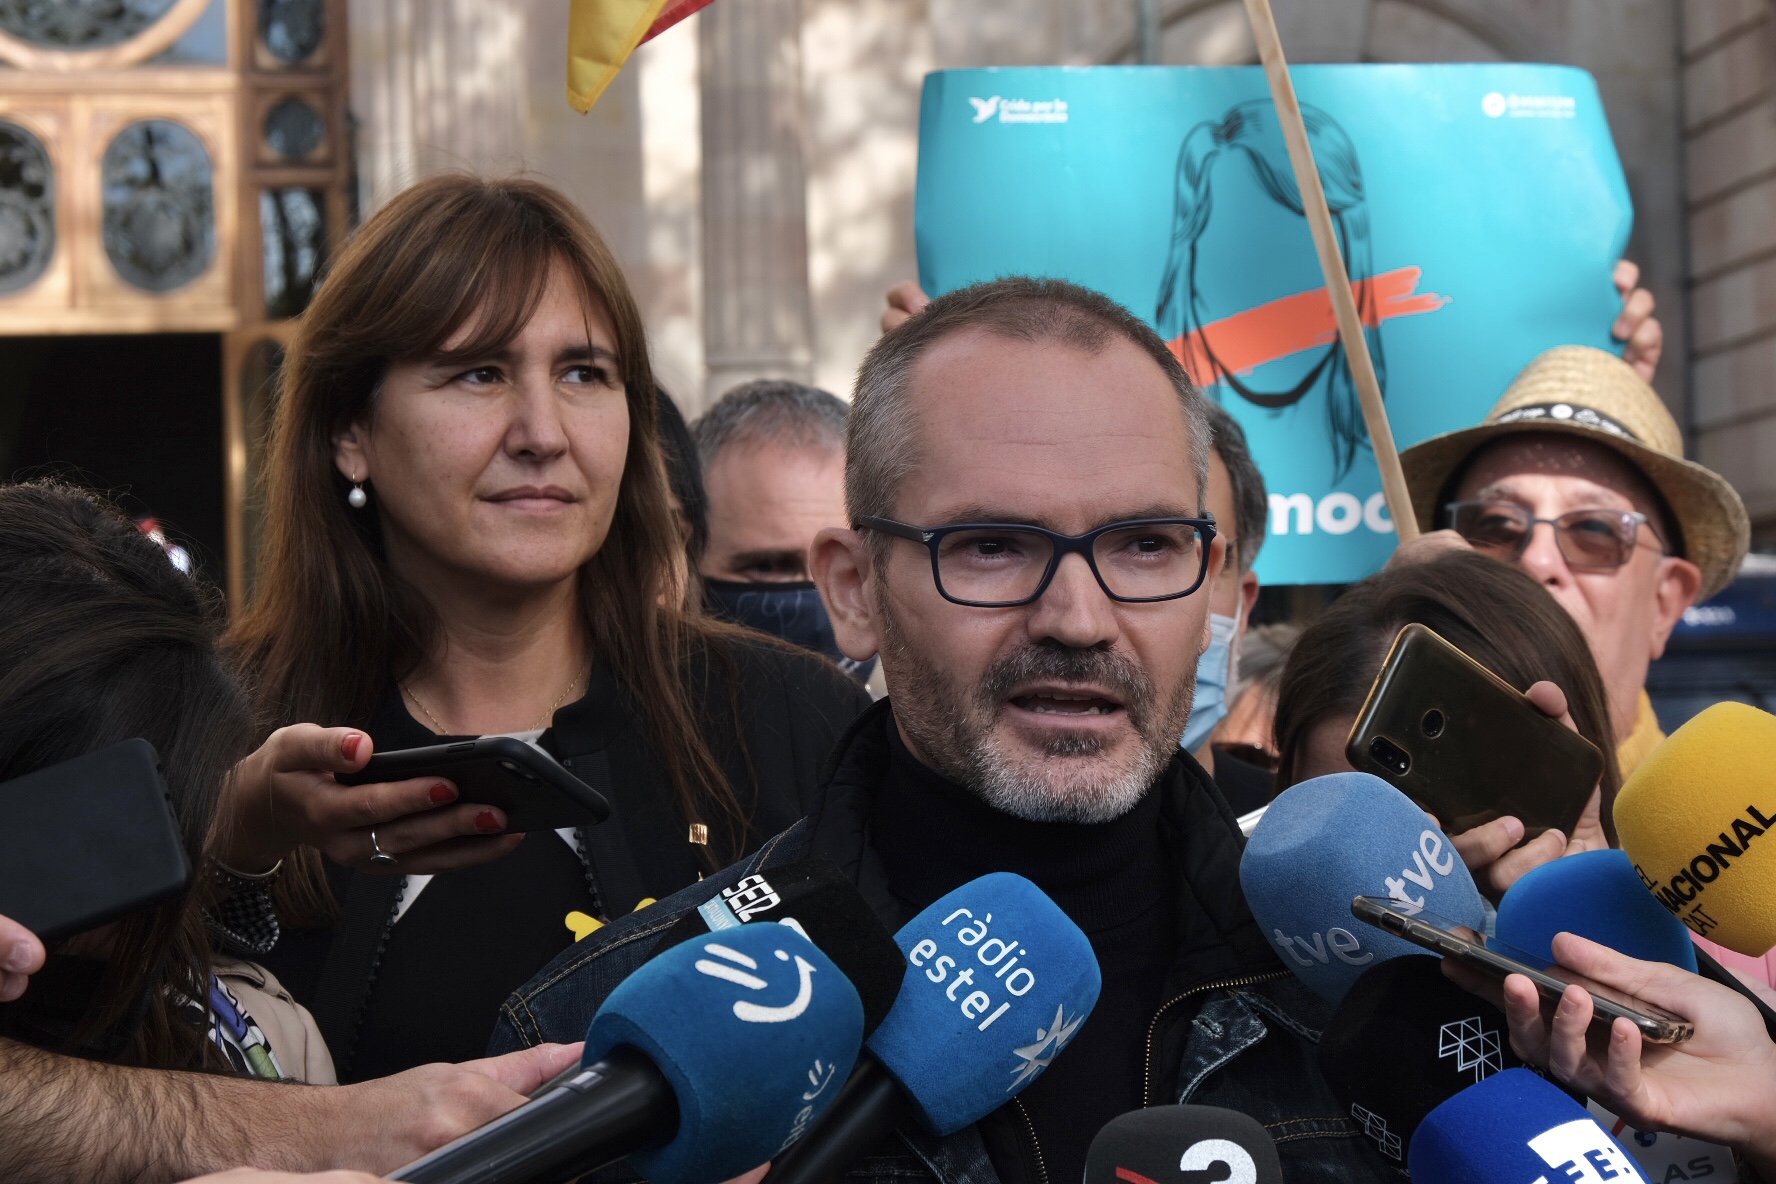 Borràs: "A provocation" to arrest Costa on anniversary of Catalonia's UDI